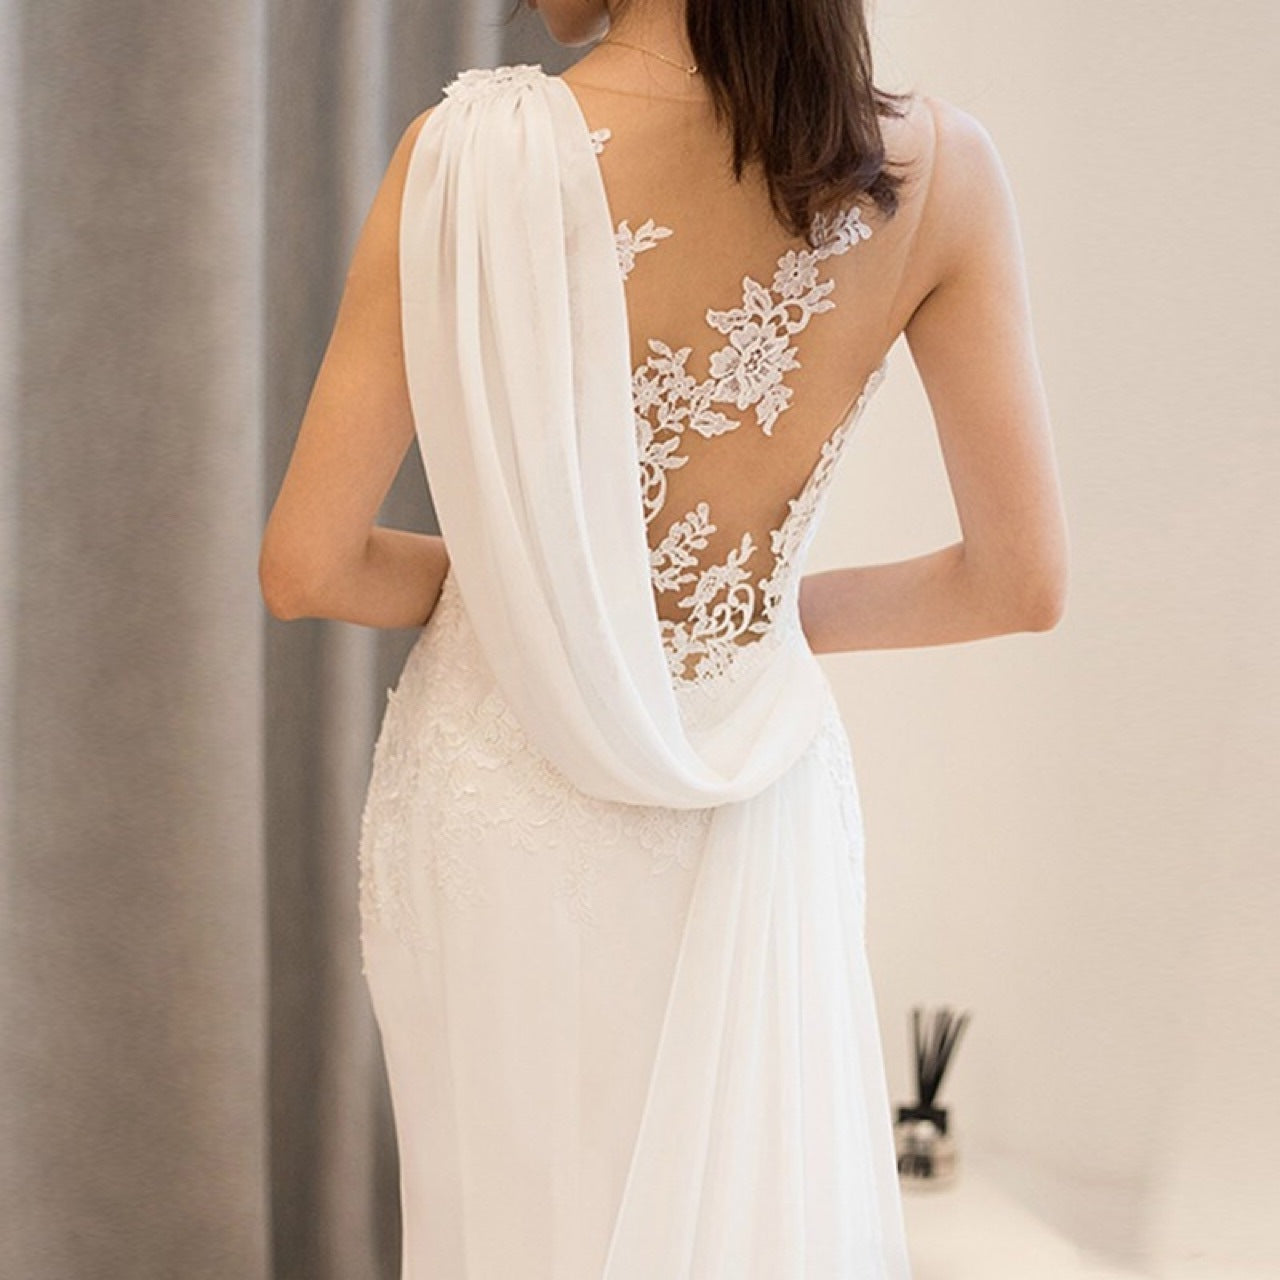 DZONN Mid-waist Dream See-through Super Fairy Light Wedding Dress